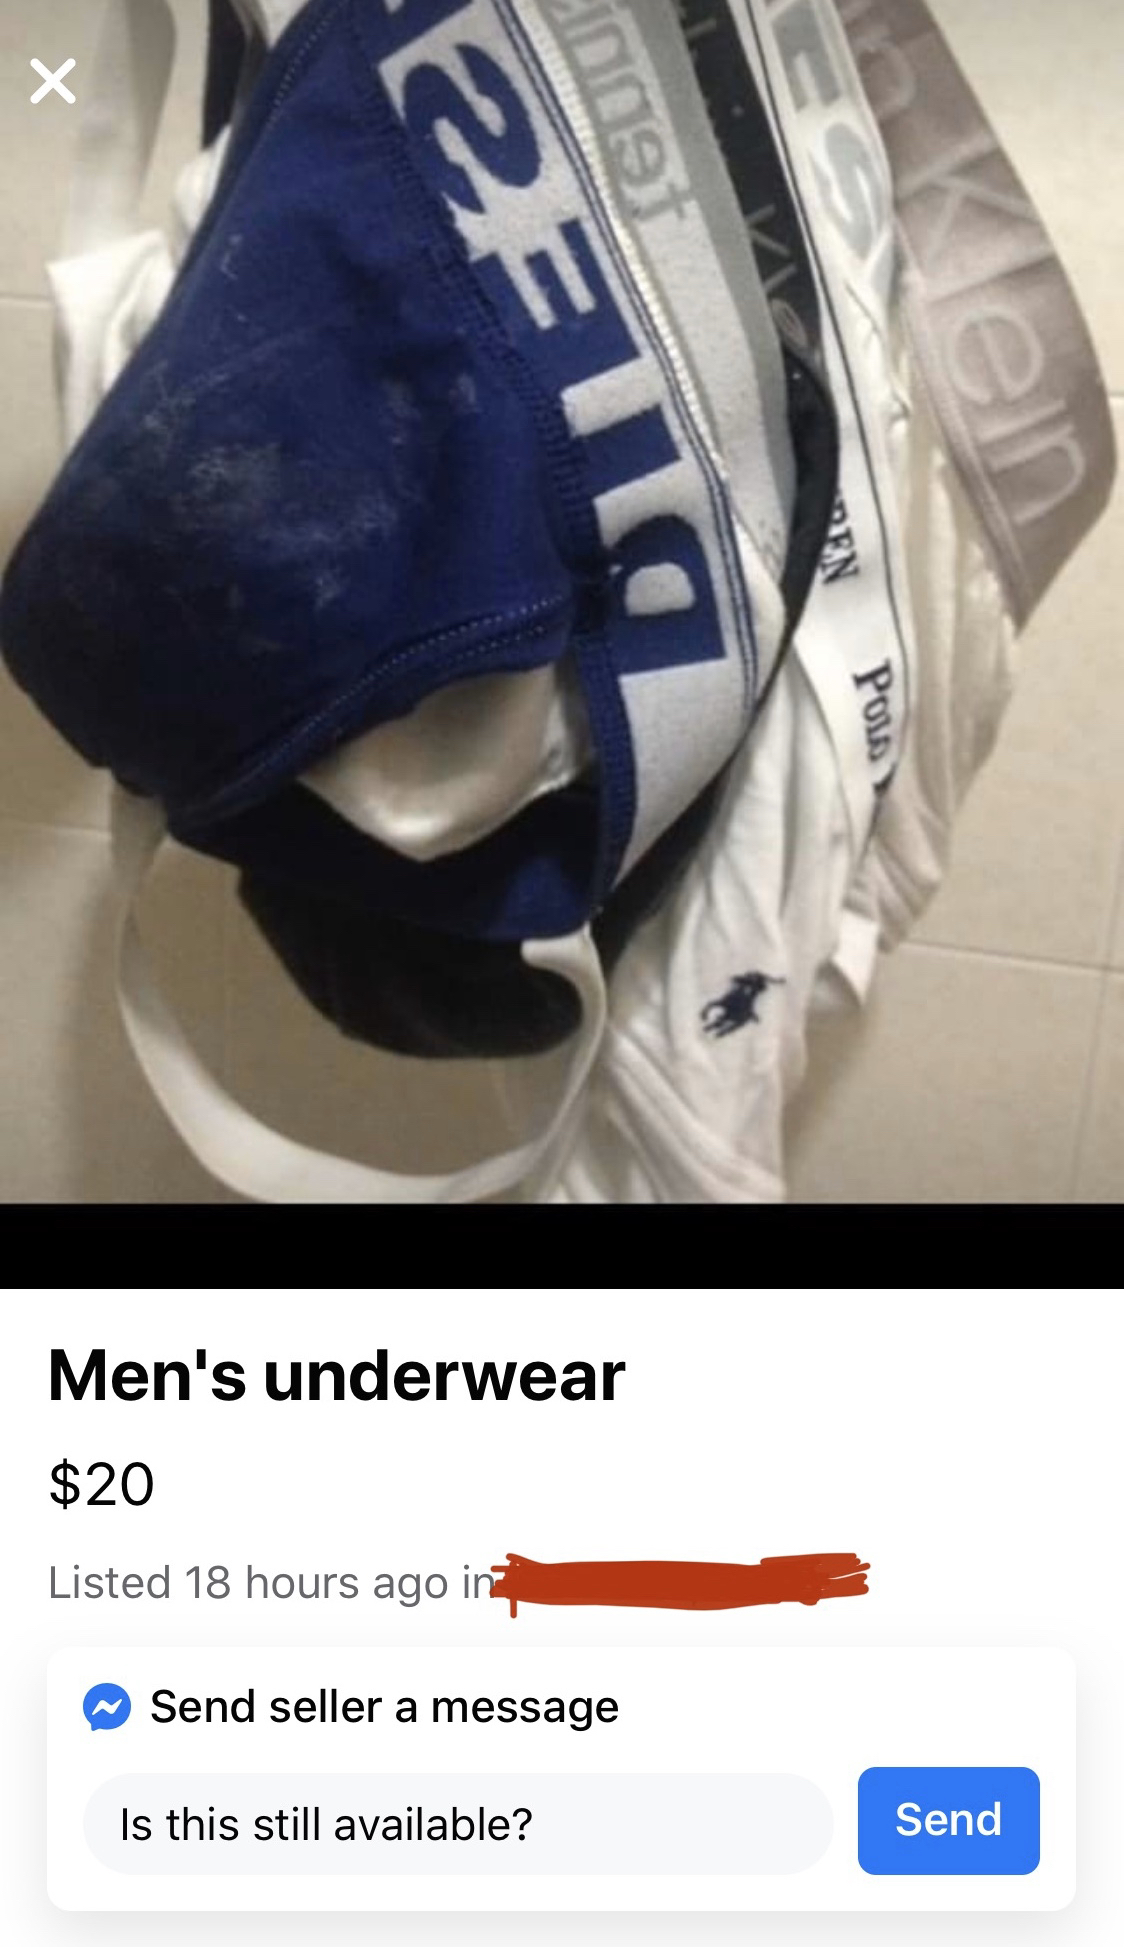 precum in underwear - Icu 221 Men's underwear $20 Listed 18 hours ago ir Send seller a message Is this still available? Send